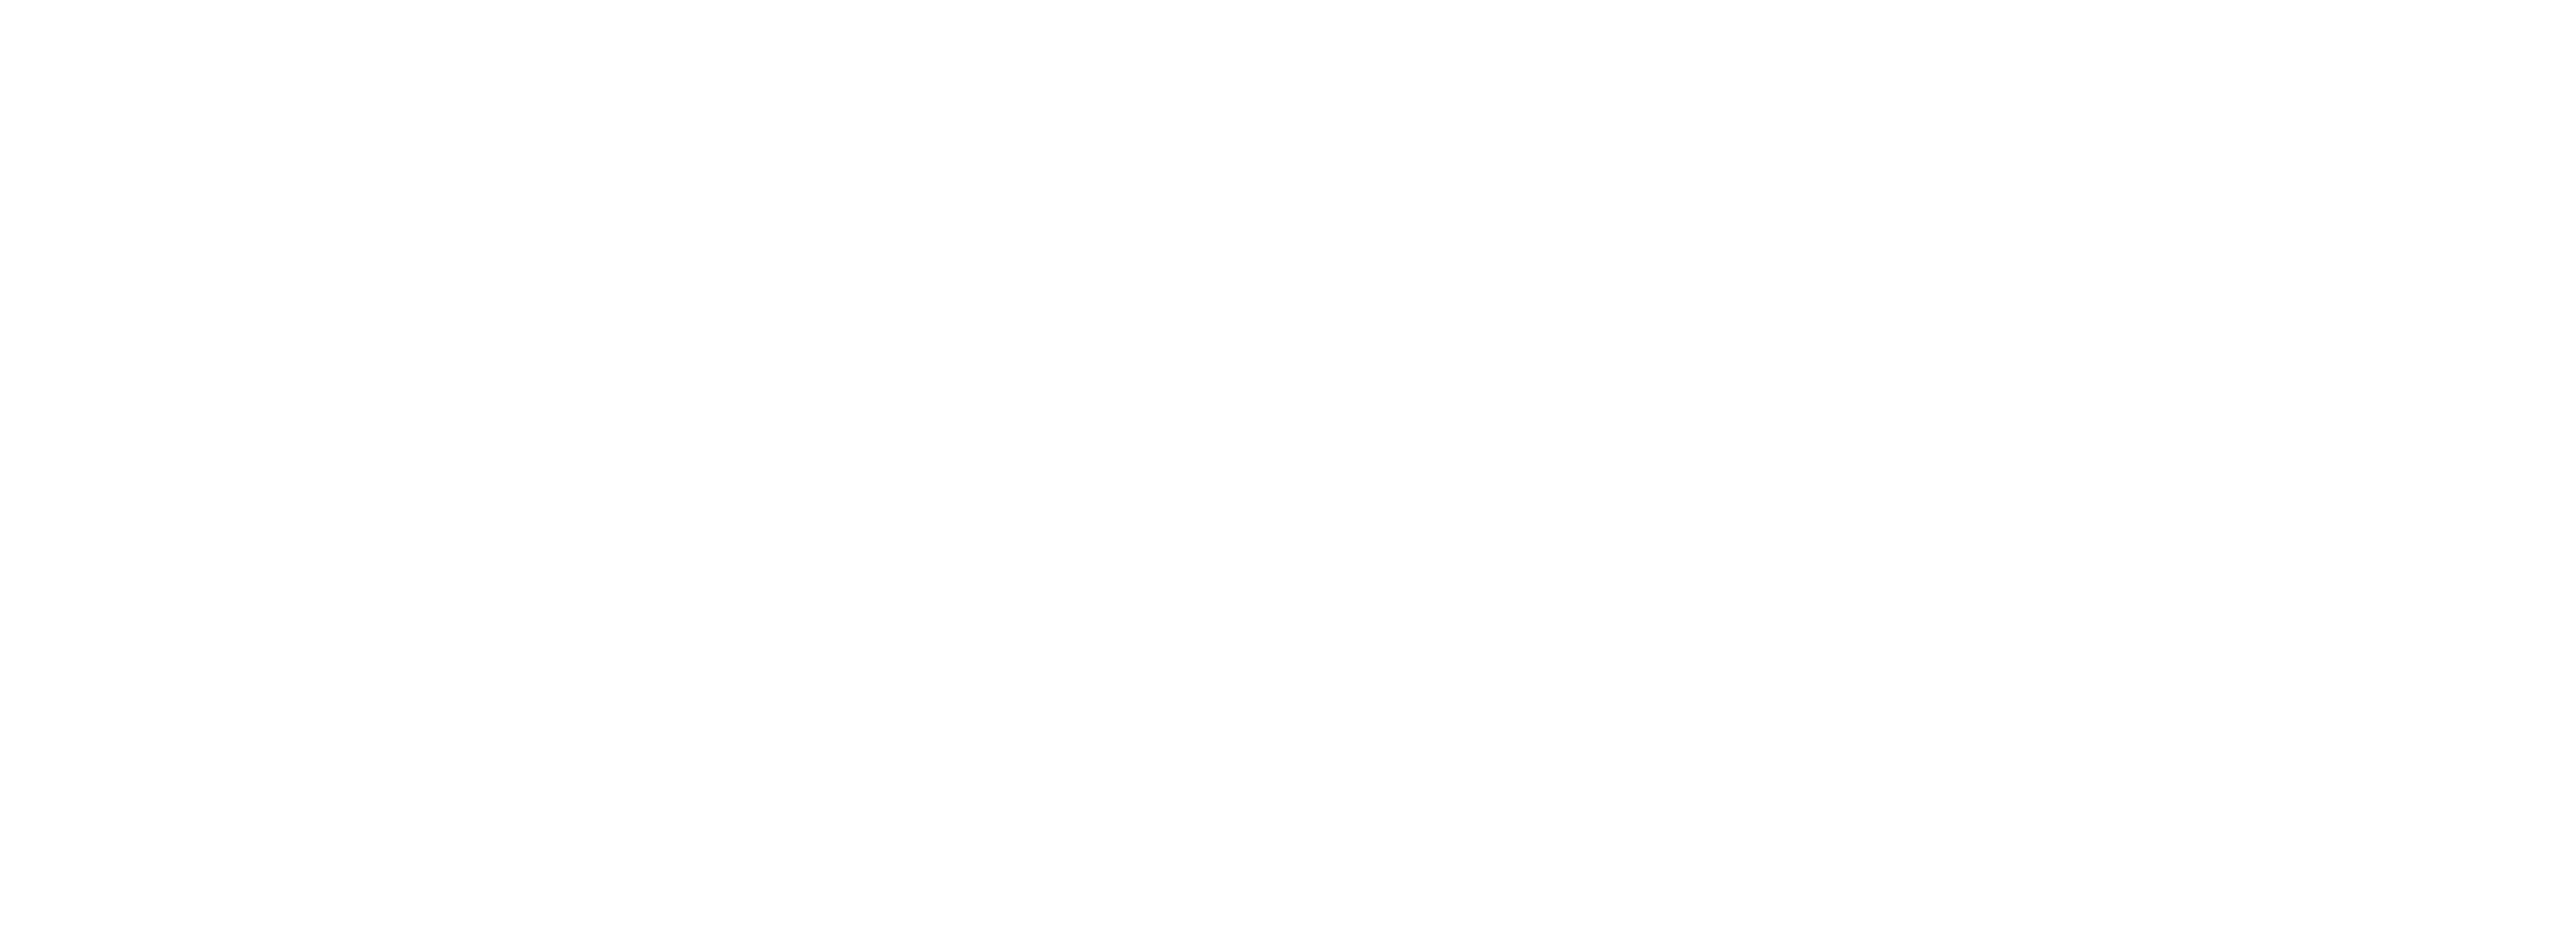 Mitica logo